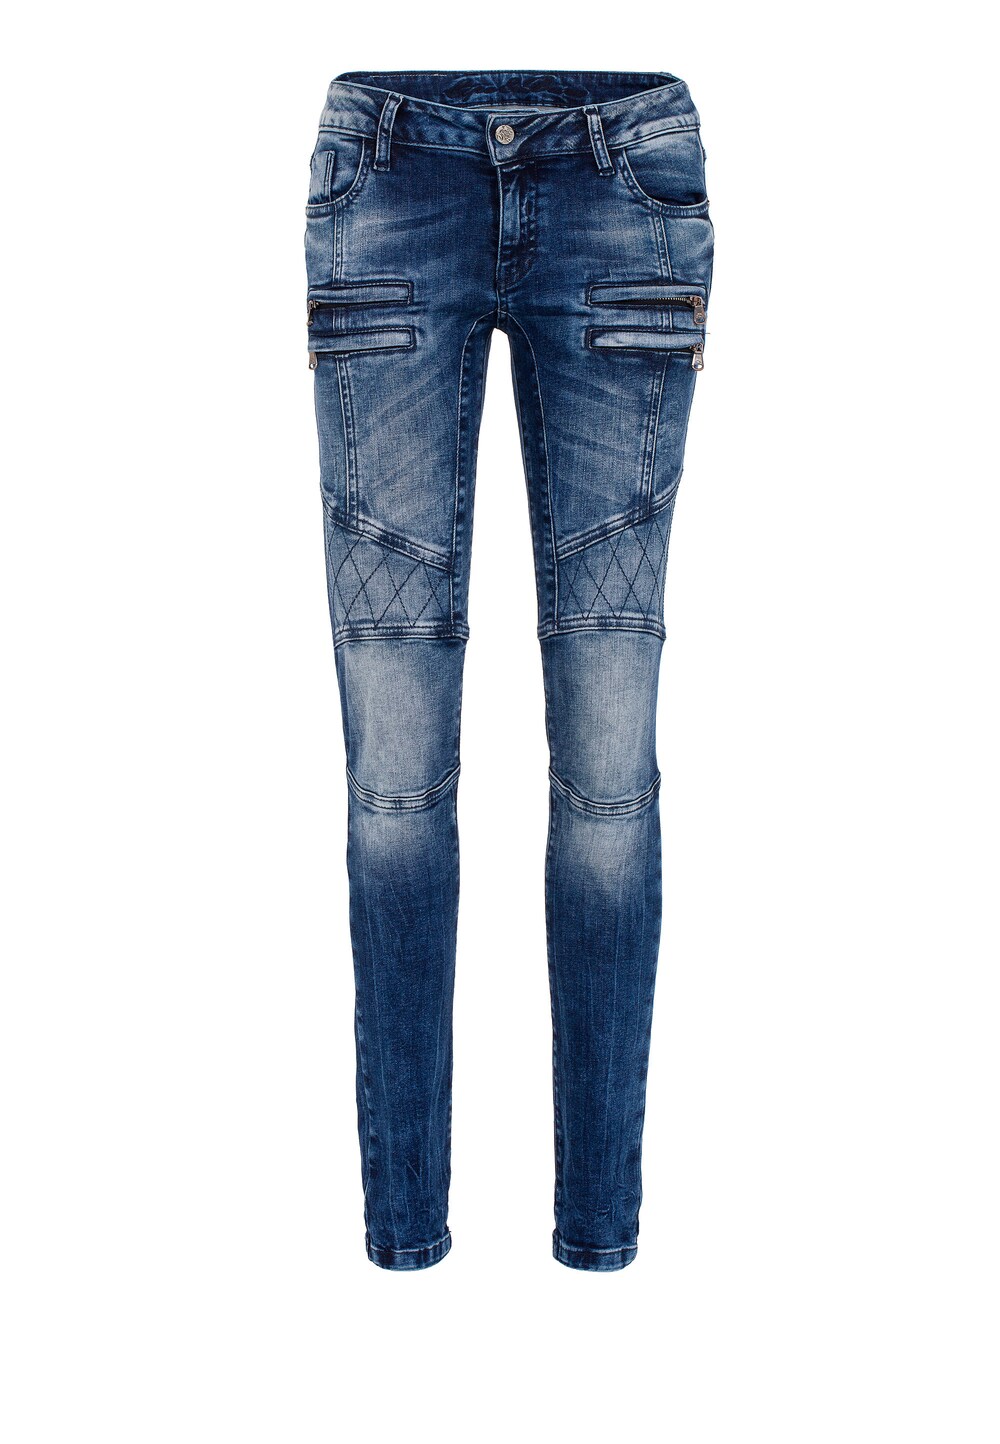 Узкие джинсы CIPO & BAXX Natty, синий фартук natty серый